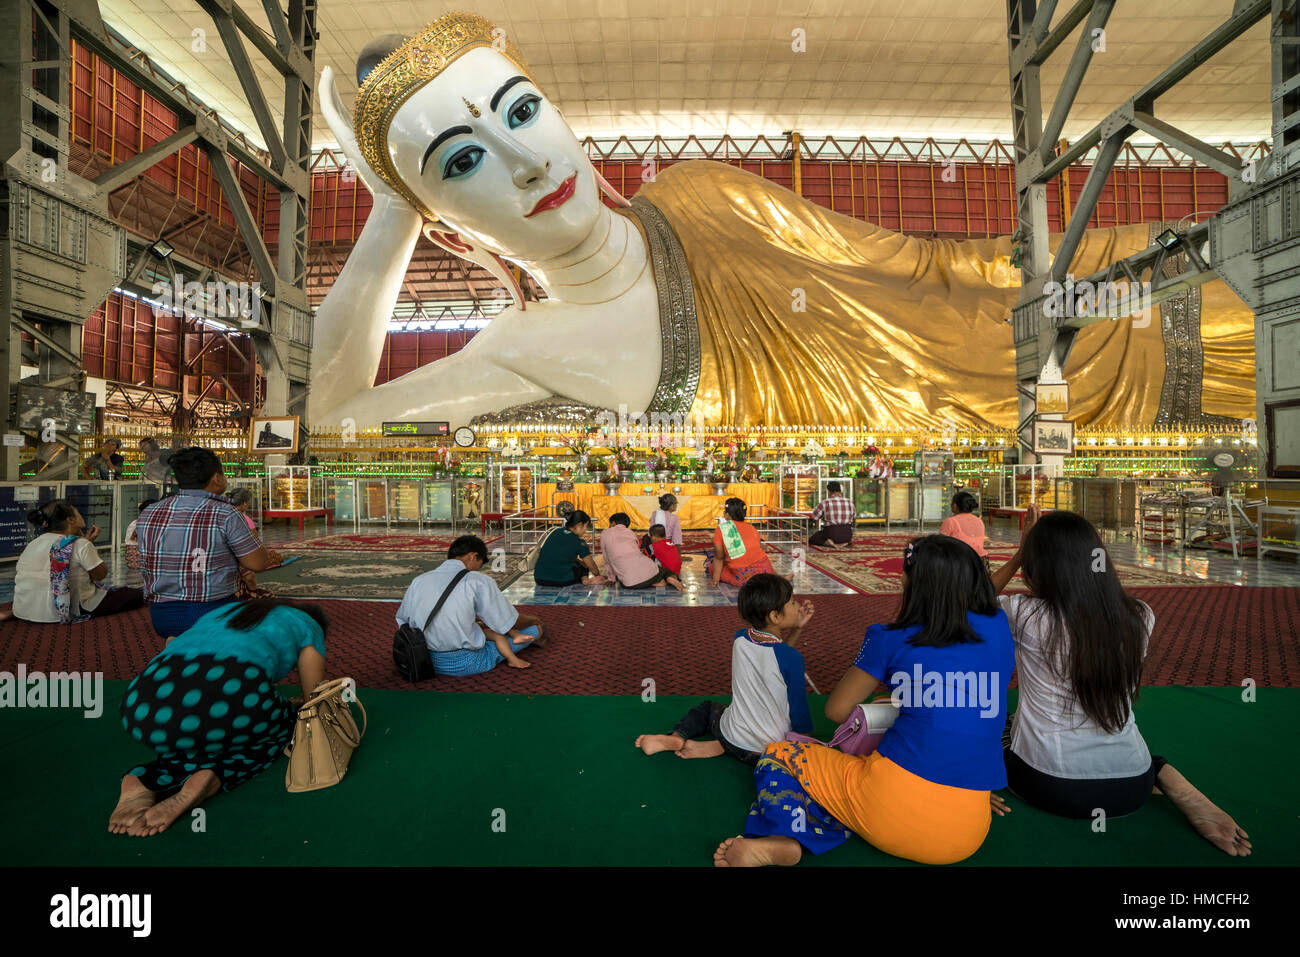 giant reclining buddha of the Chauk Htat Gyi Pagoda in Yangon  or Rangoon, Myanmar, Asia Stock Photo